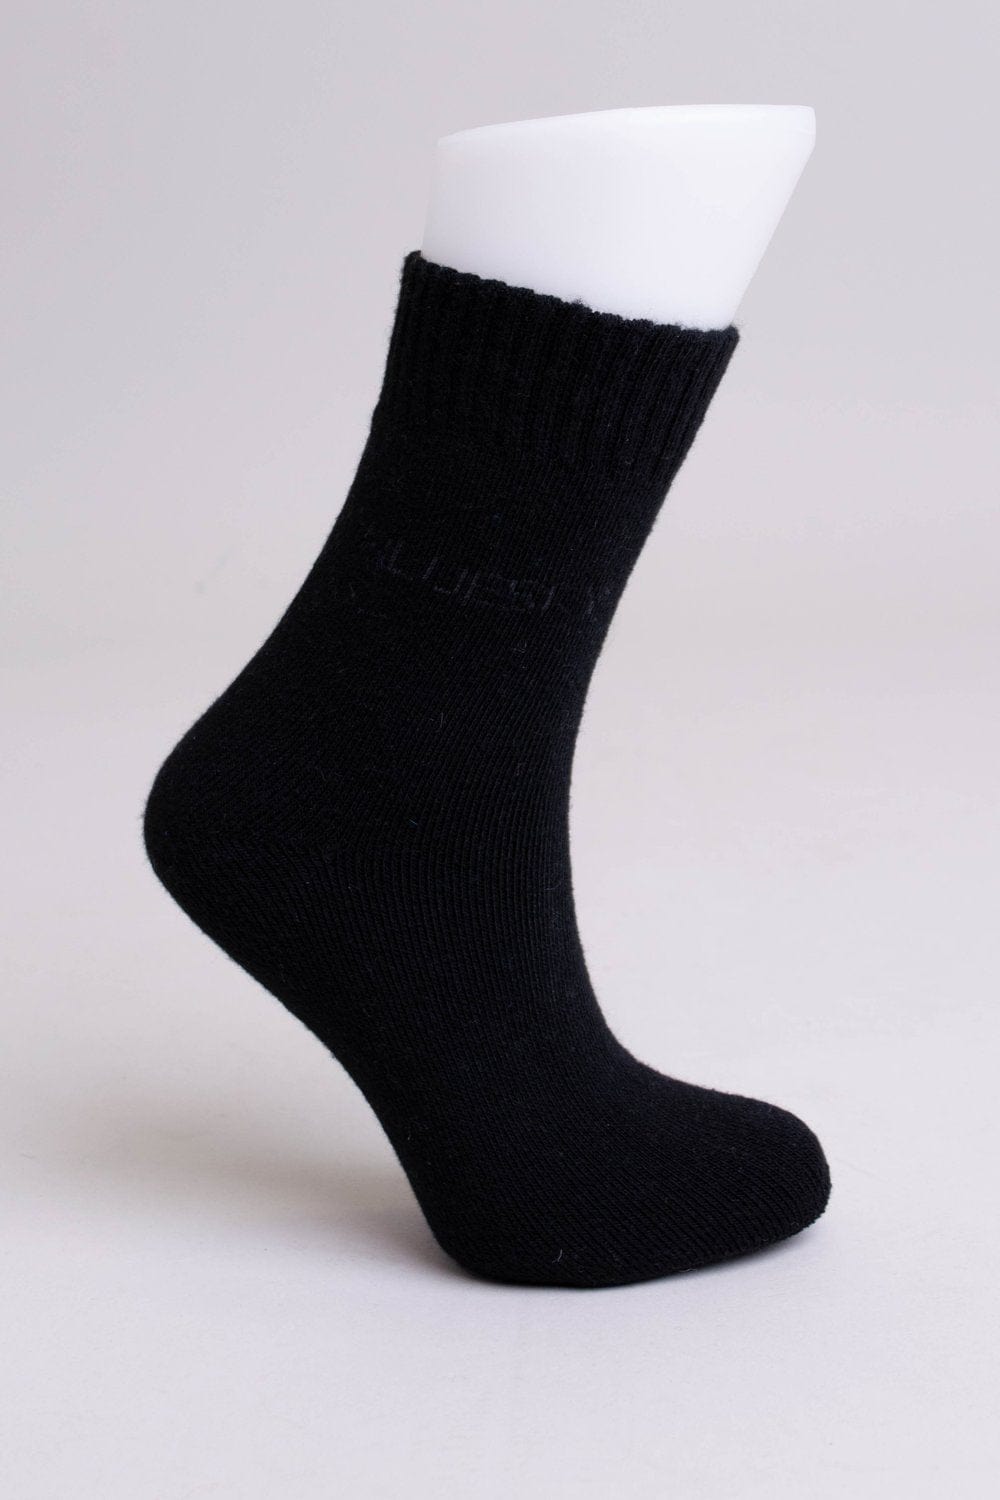 Men's Merino Wool Socks - Prudence Natural Beauty & Fashion